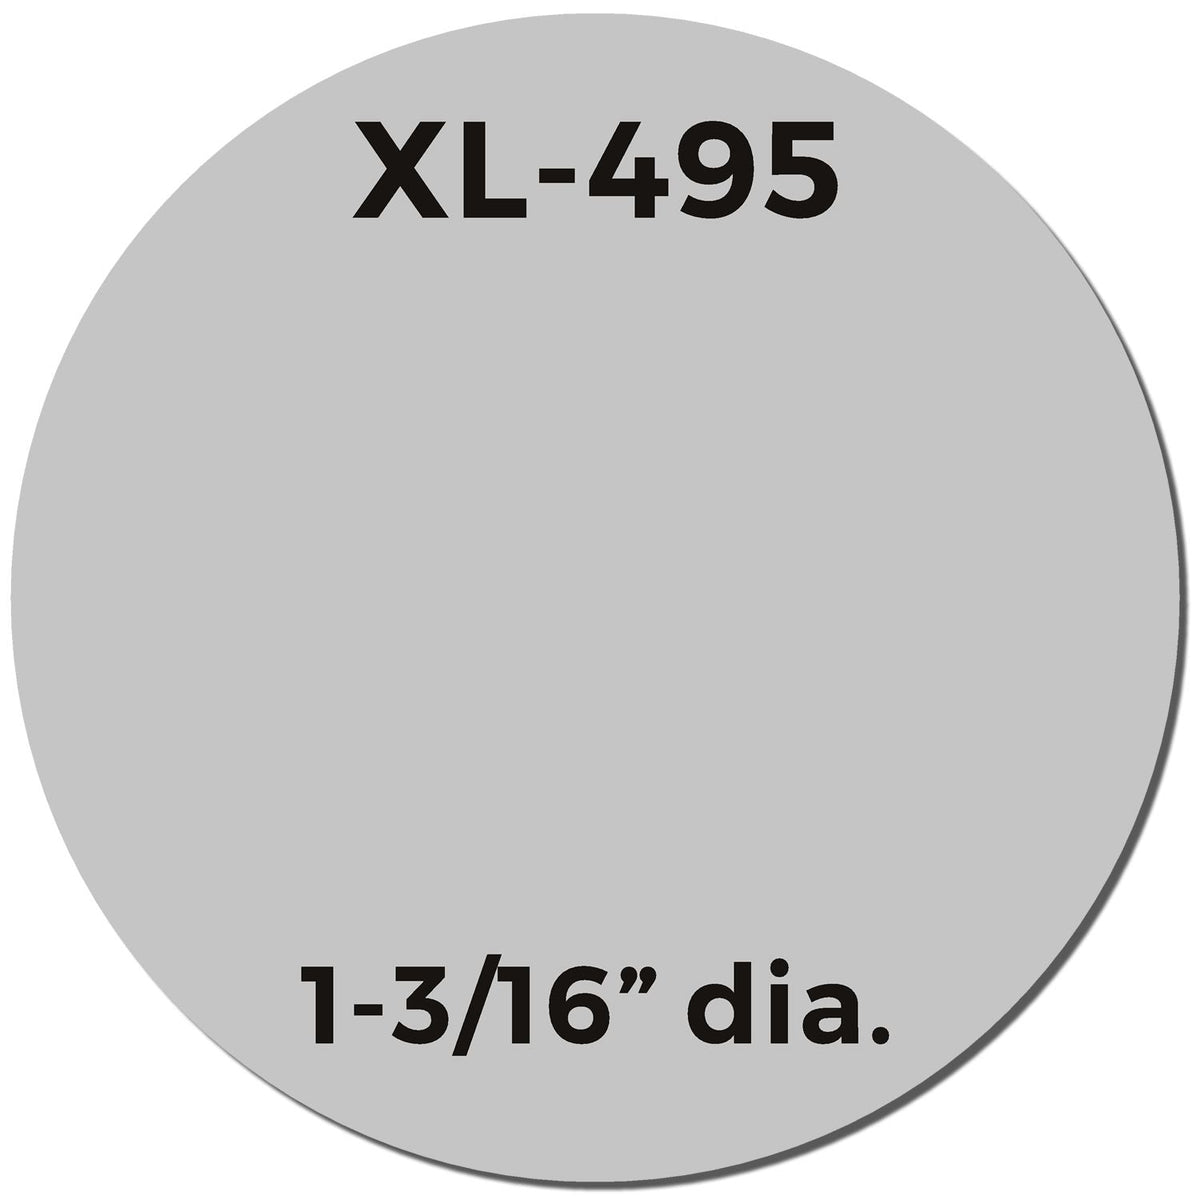 Maxlight Xl2 495 Pre Inked Stamp 1 3 16 Diameter Imprint Sample